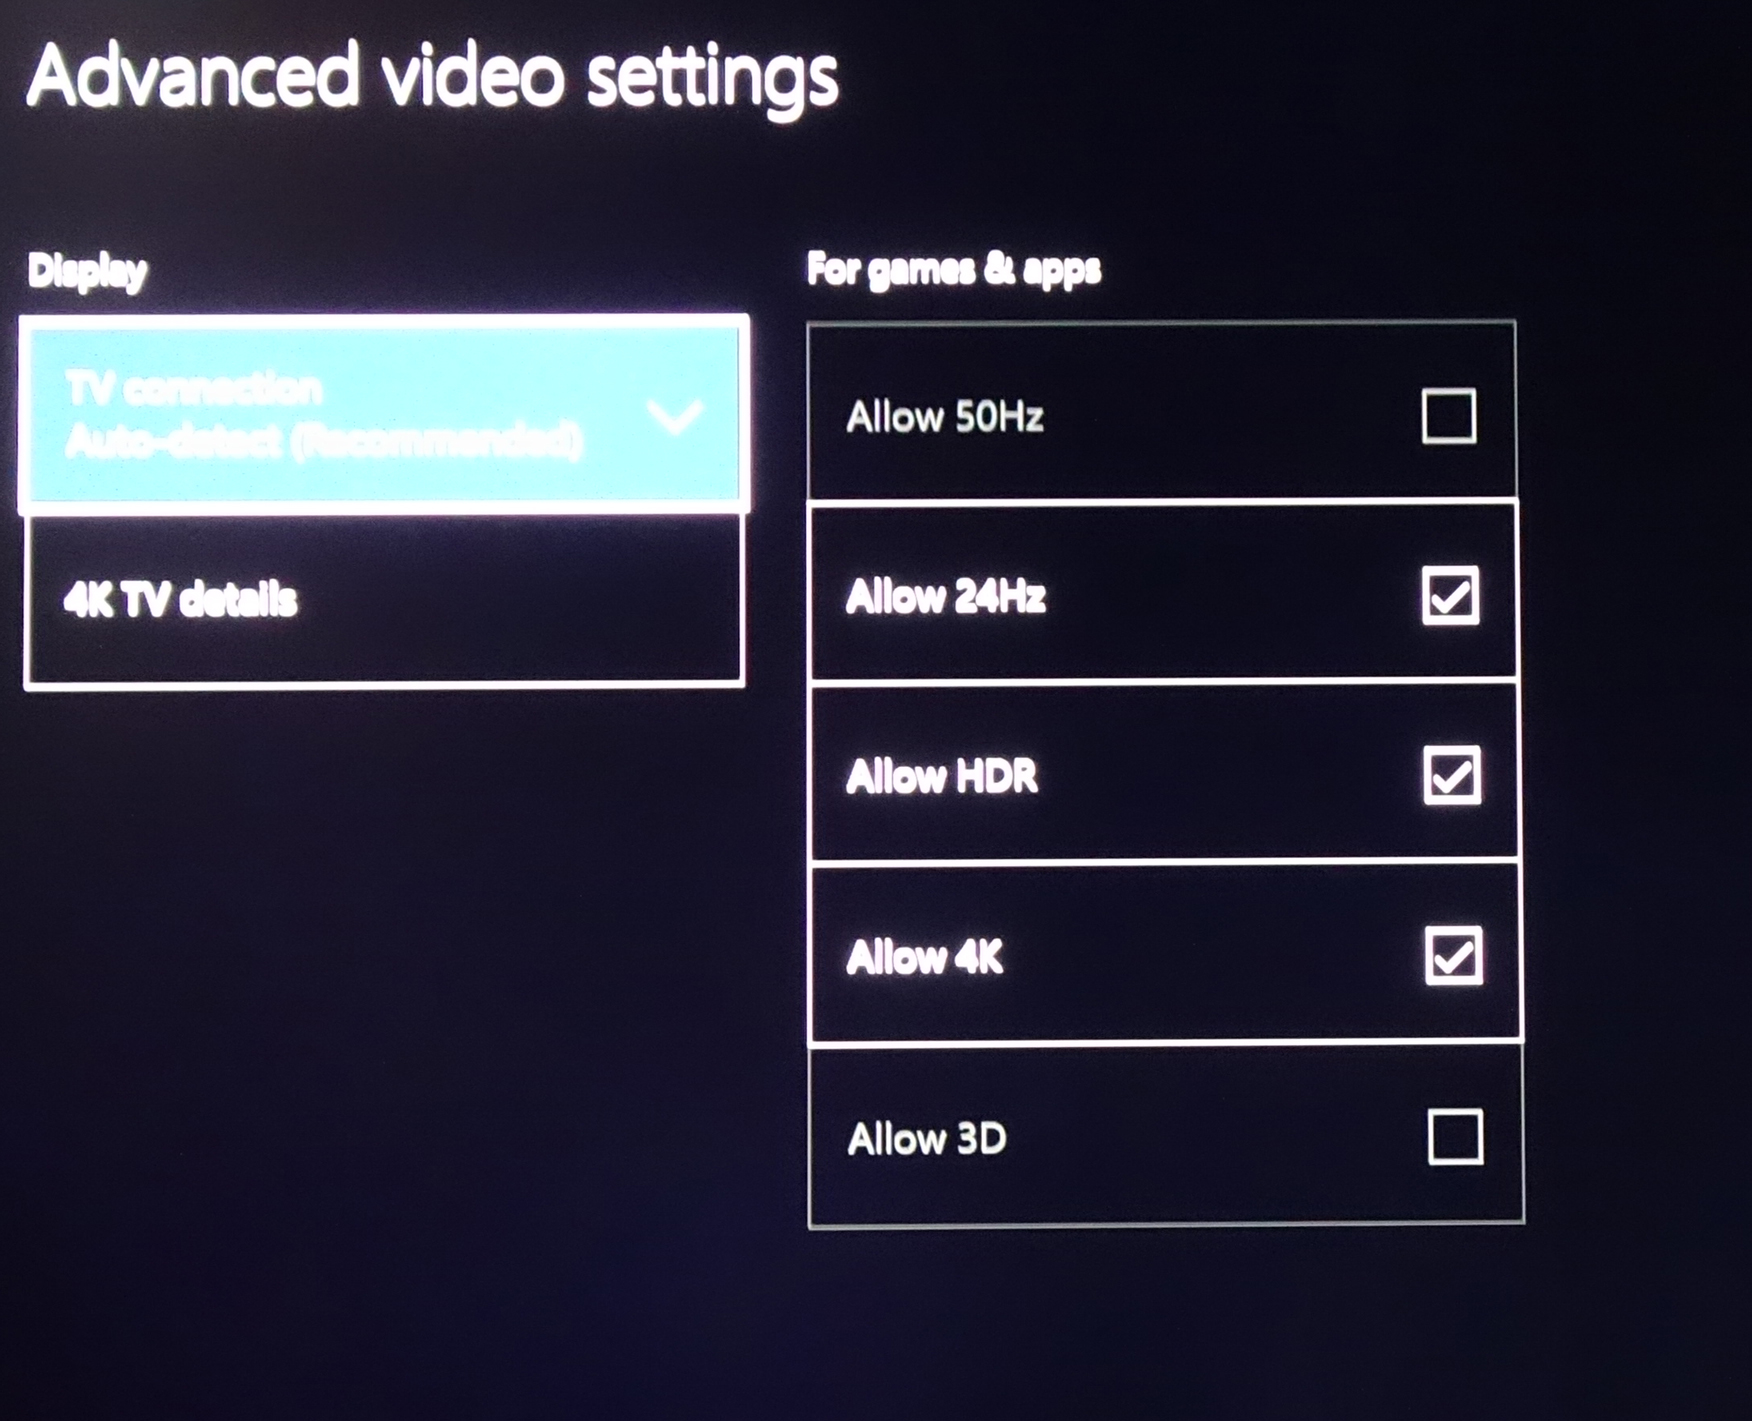 Xbox One S Advanced video settings